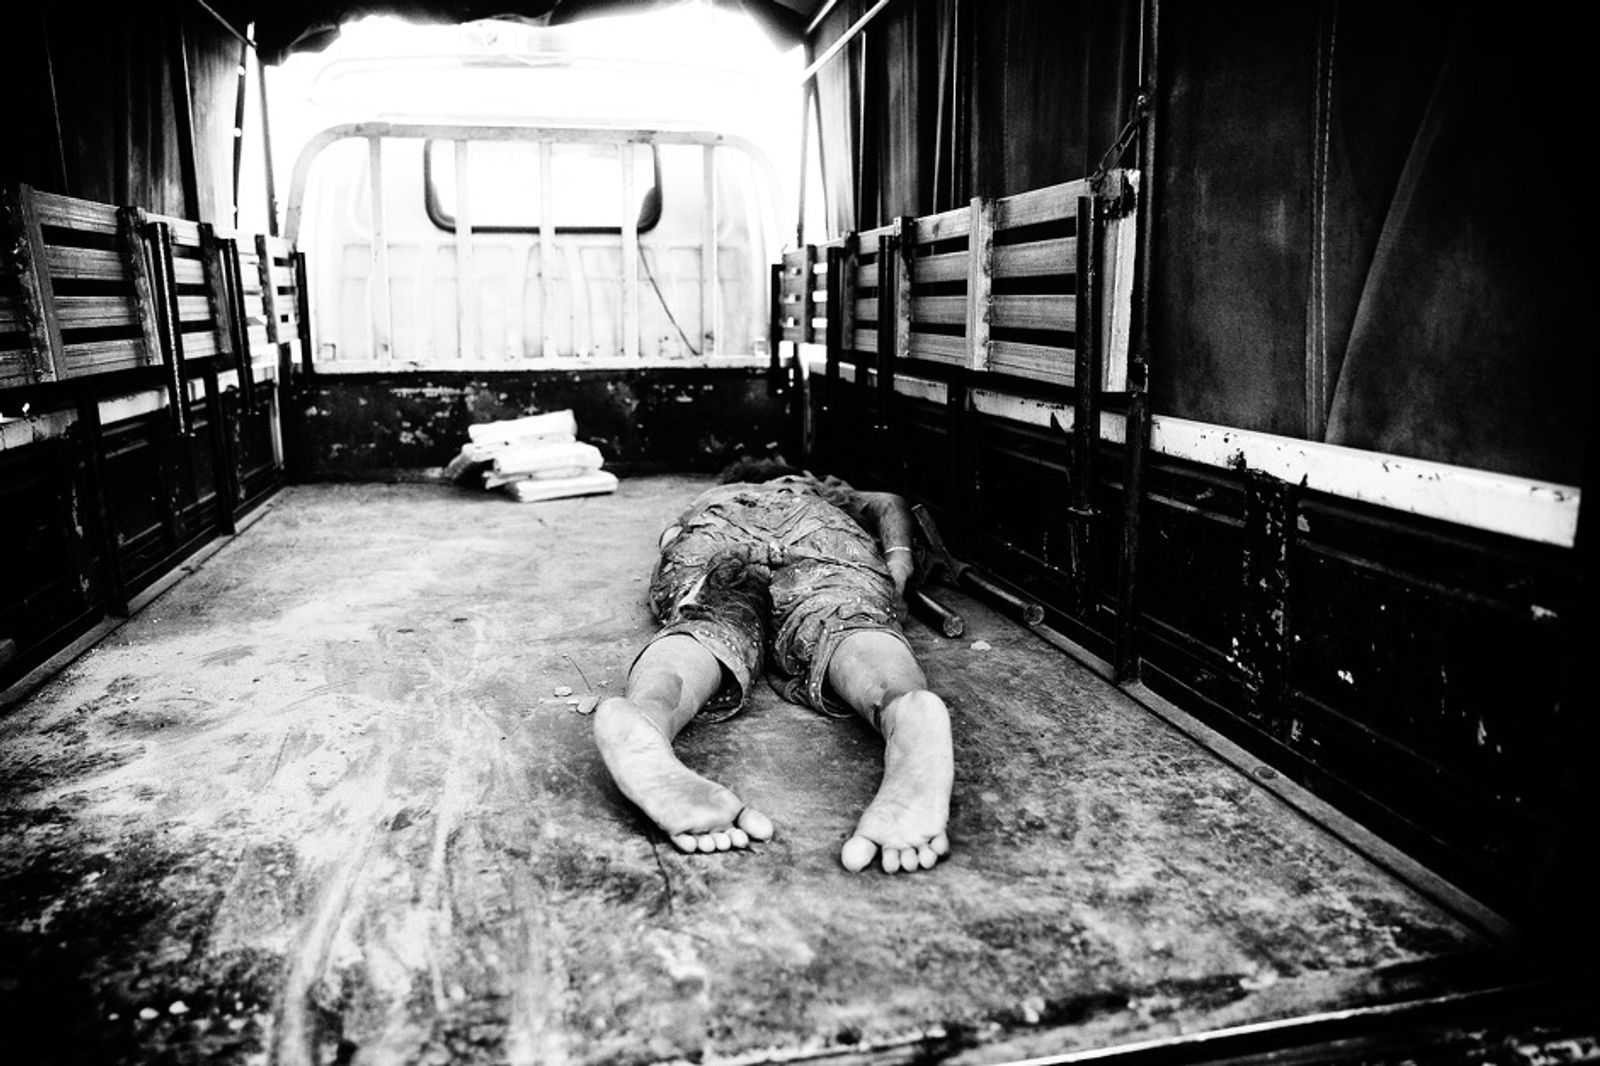 © Suvra Kanti Das - Dead body of a garments worker lay inside of the truck, Savar, near Dhaka, Bangladesh